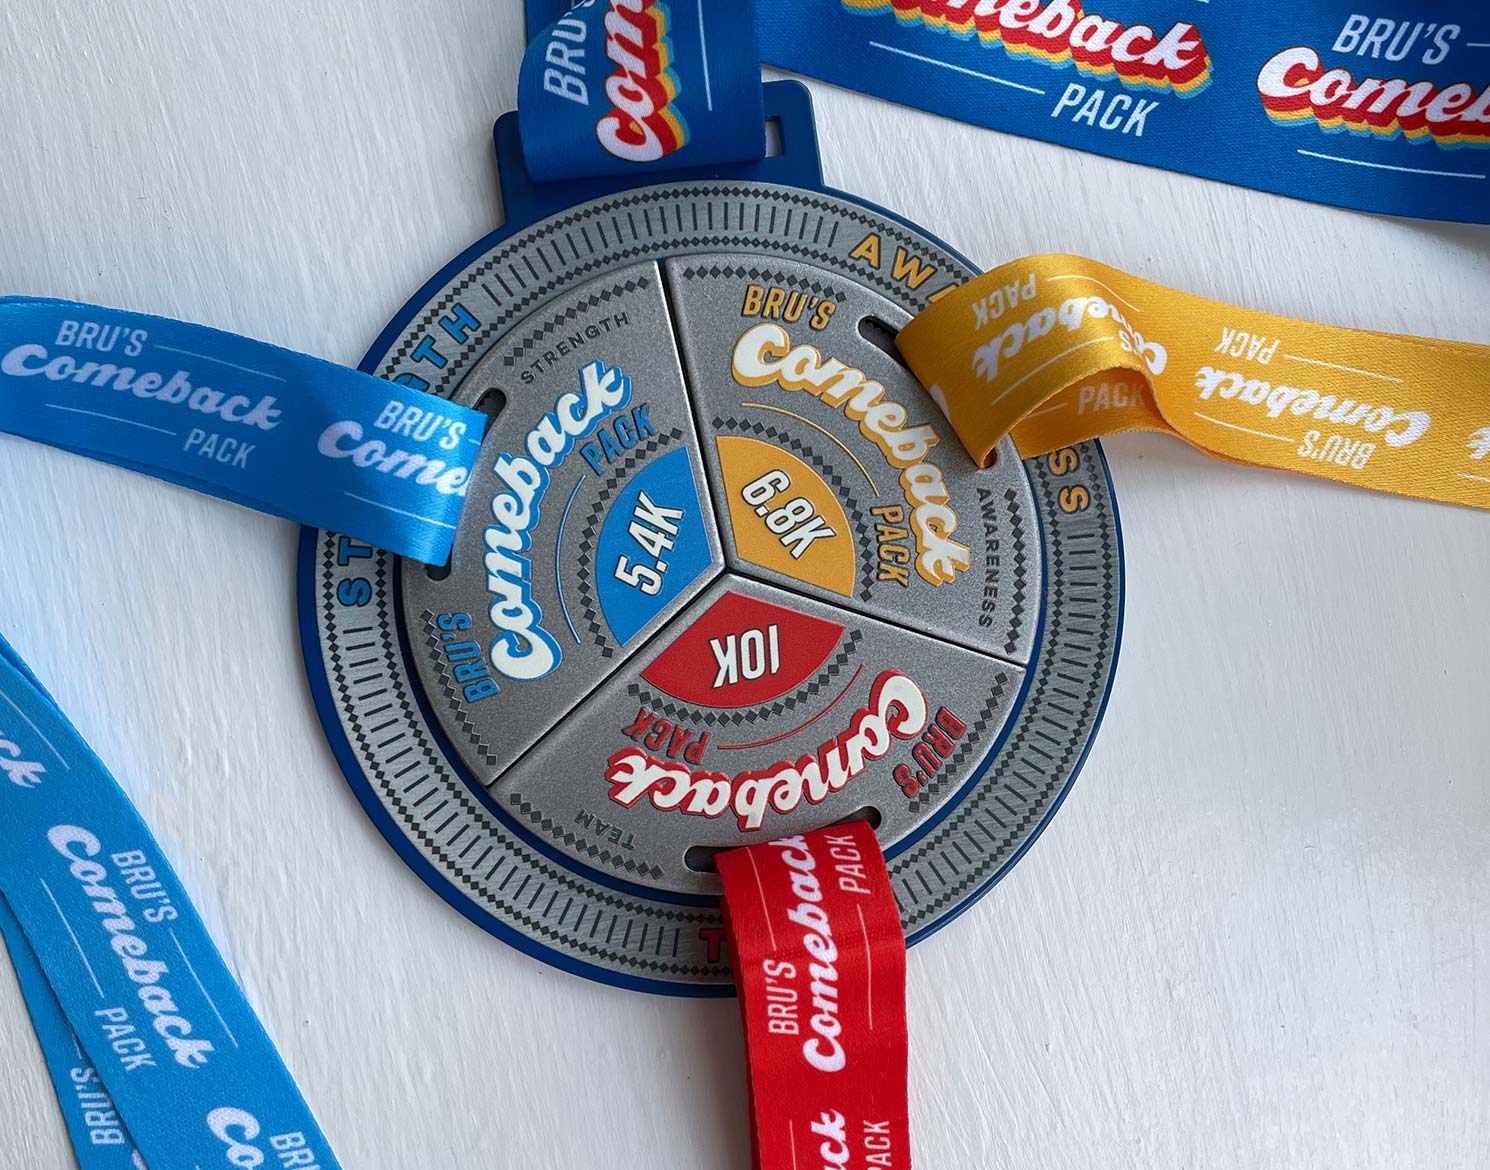 Jackrabbit philanthropy example for Tedy's Team: Comeback race series medal design